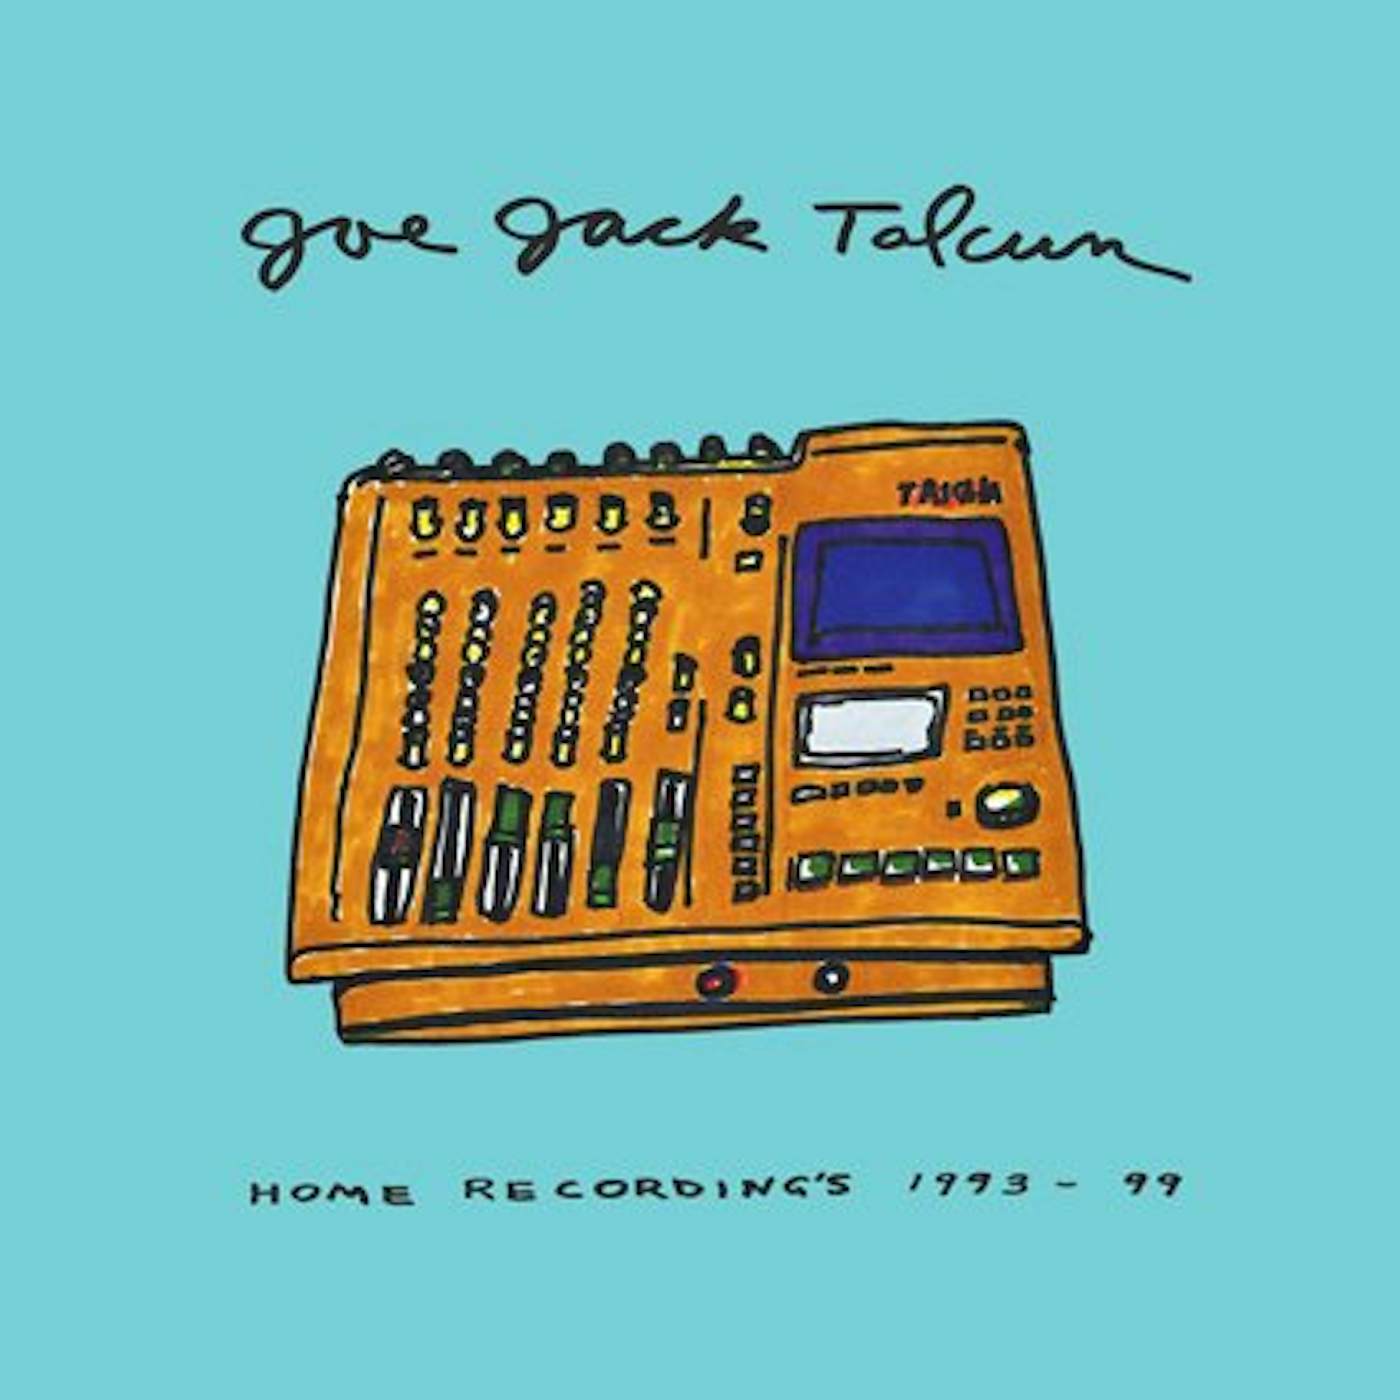 Joe Jack Talcum HOME RECORDINGS 2 1993-99 Vinyl Record